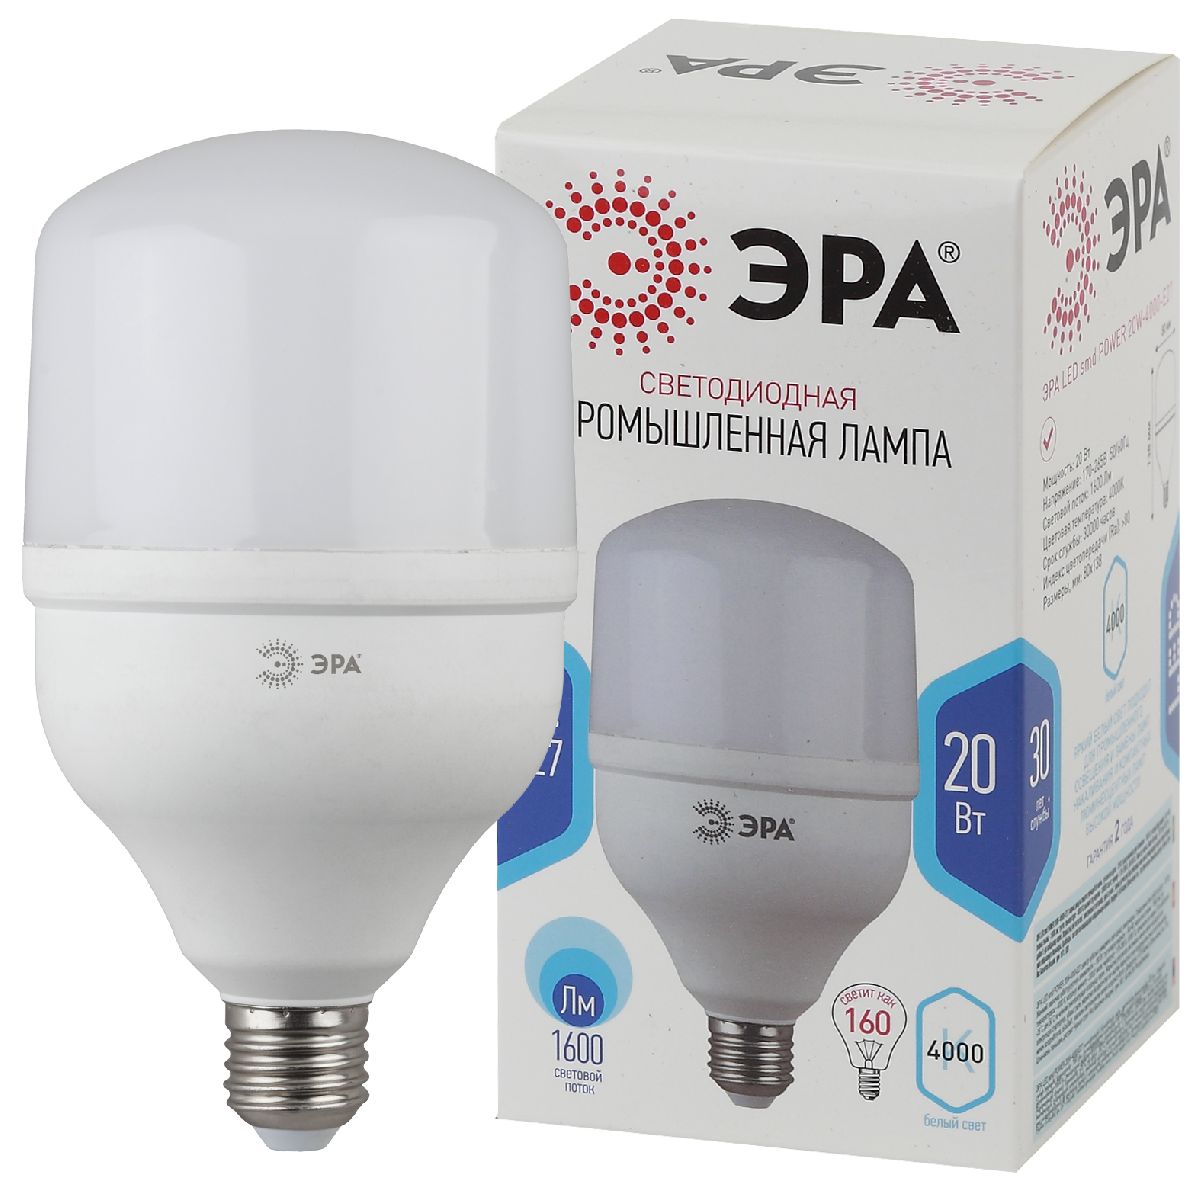 Лампа светодиодная Эра E27 20W 6500K LED POWER T80-20W-6500-E27 Б0049588